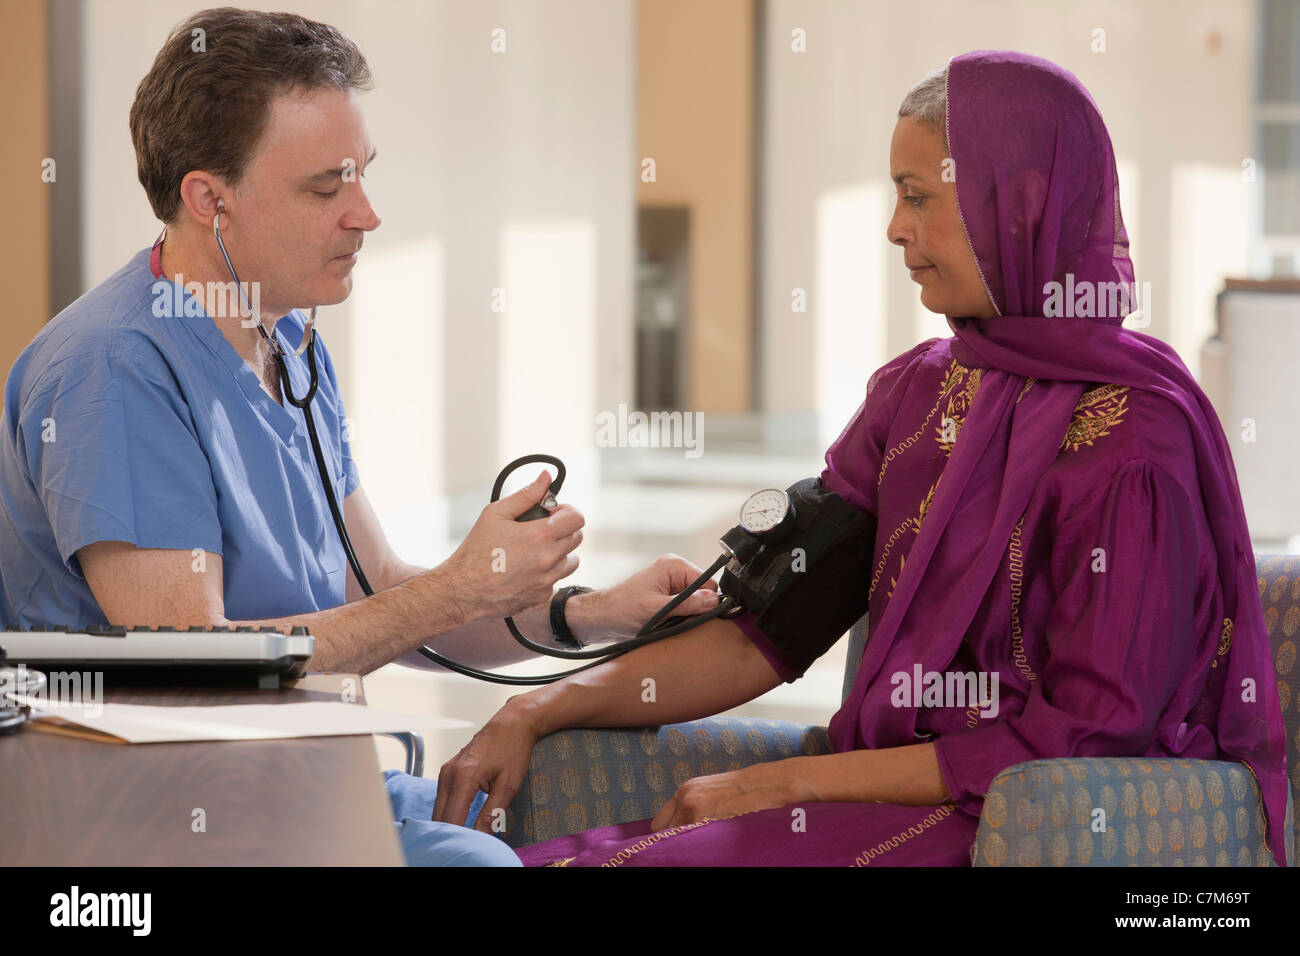 Male nurse measuring a patient's blood pressure Stock Photo